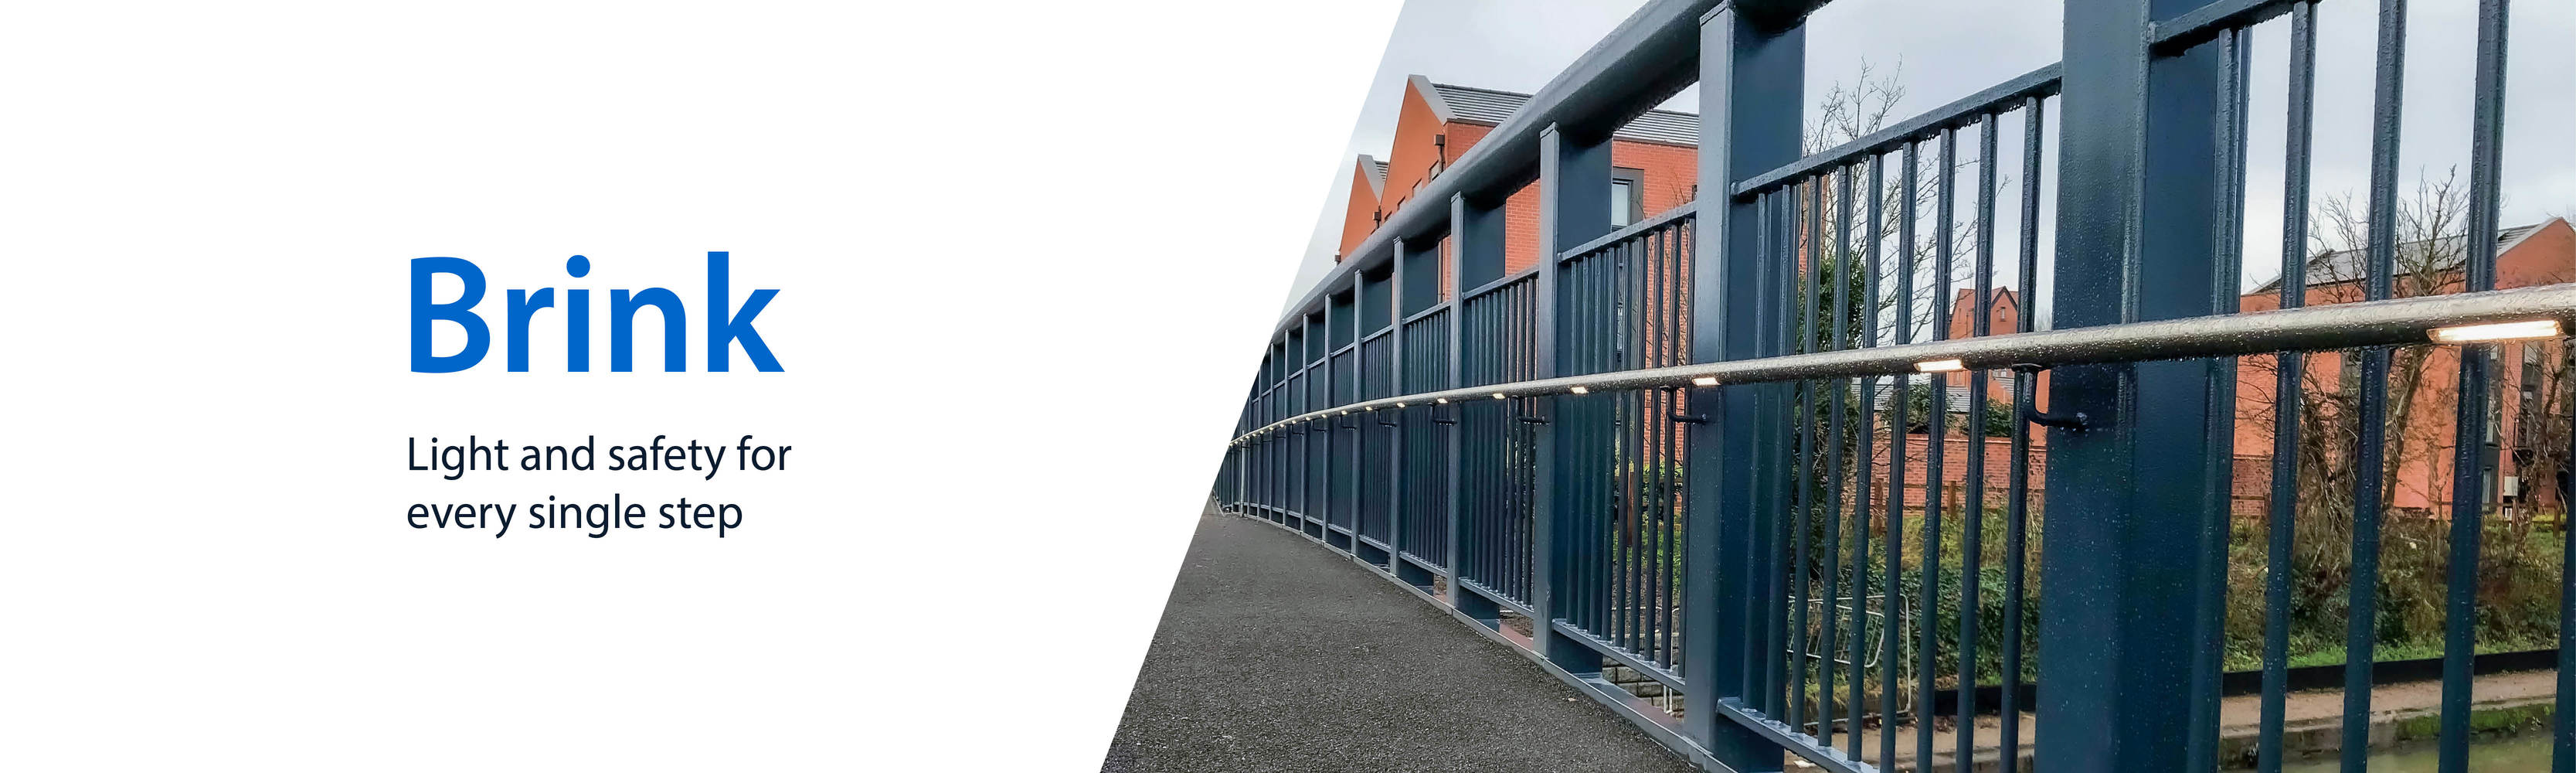 Brink - A new range of bespoke illuminated handrails